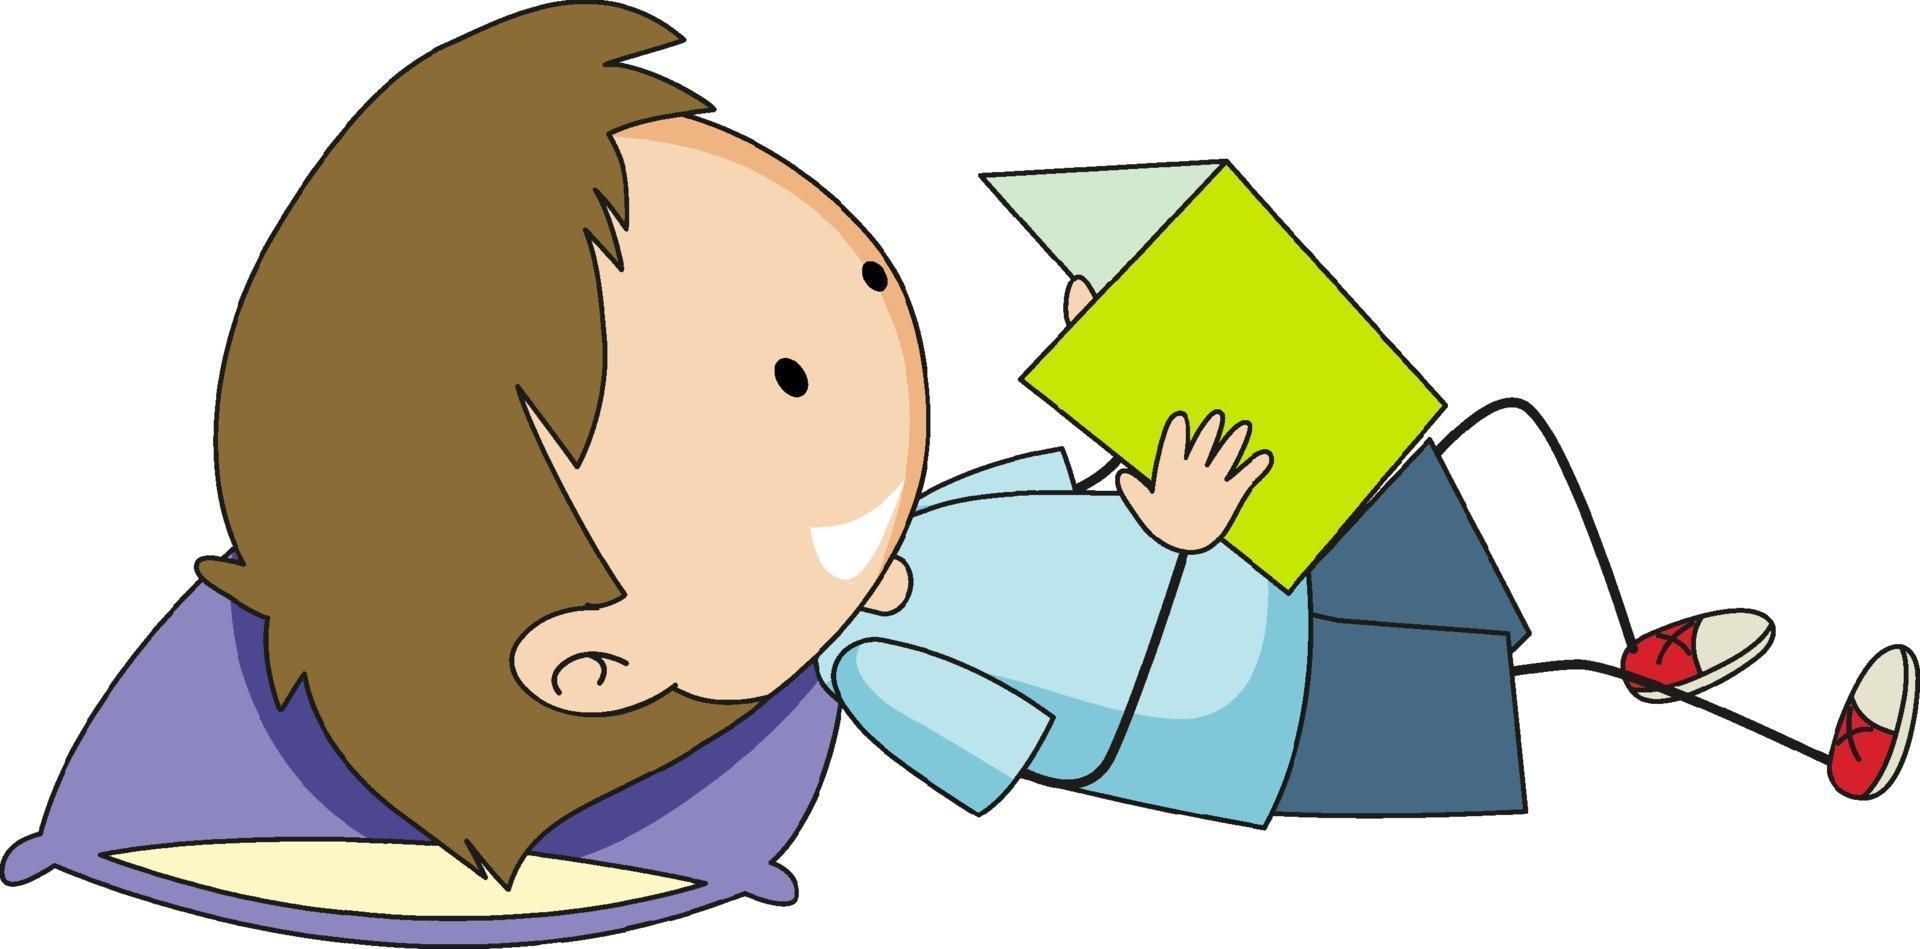 A boy reading book cartoon character vector